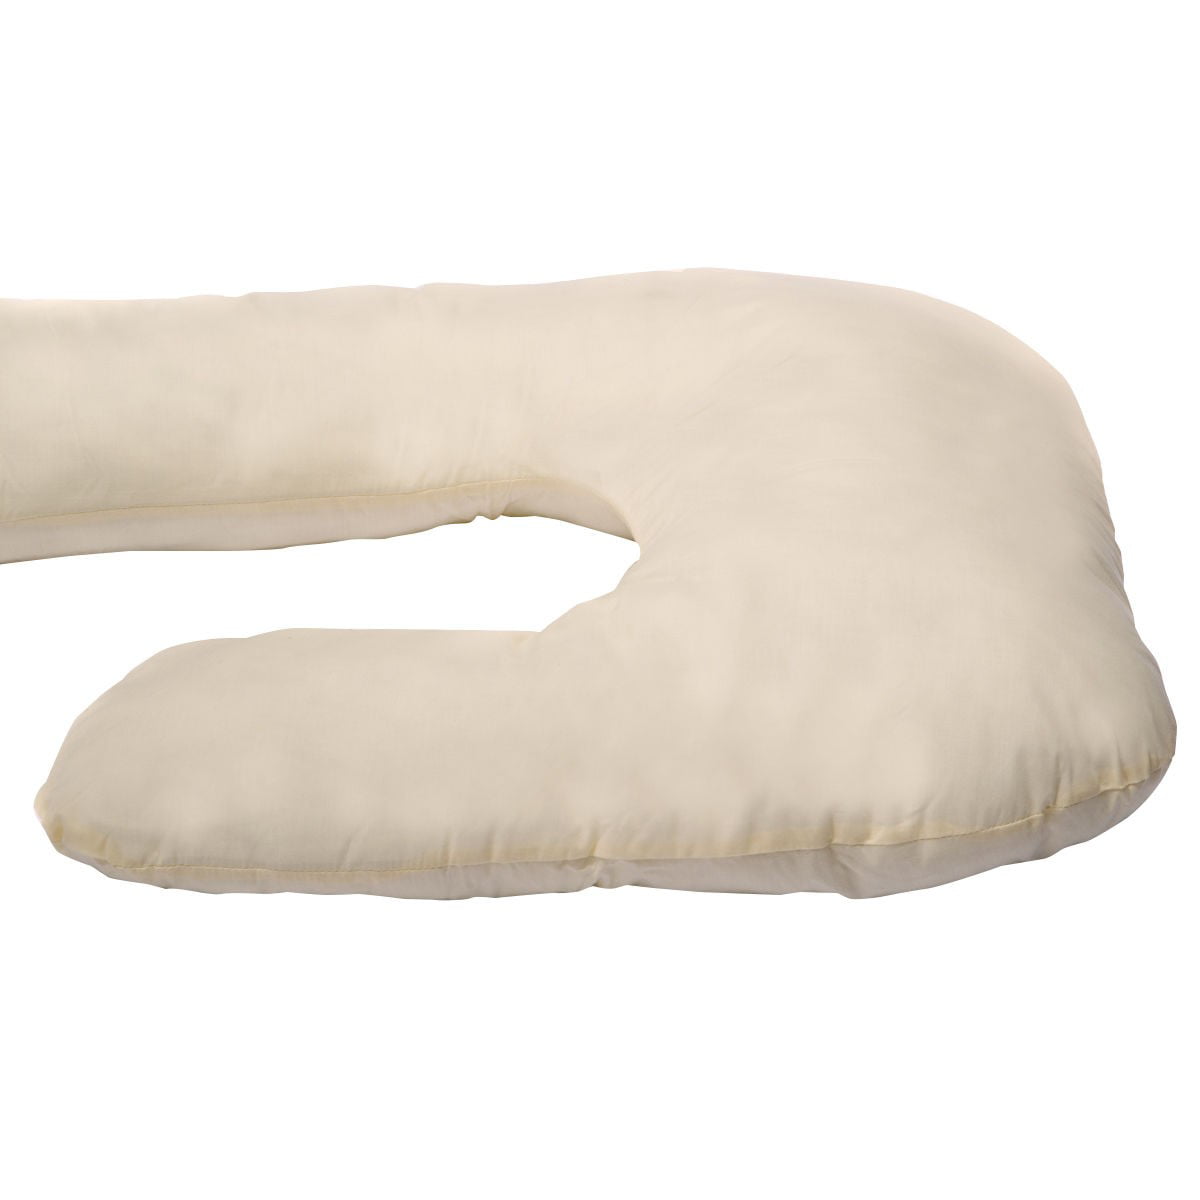 C Shape Total Body Pillow Pregnancy Maternity Comfort Support Cushion Sleep BP 